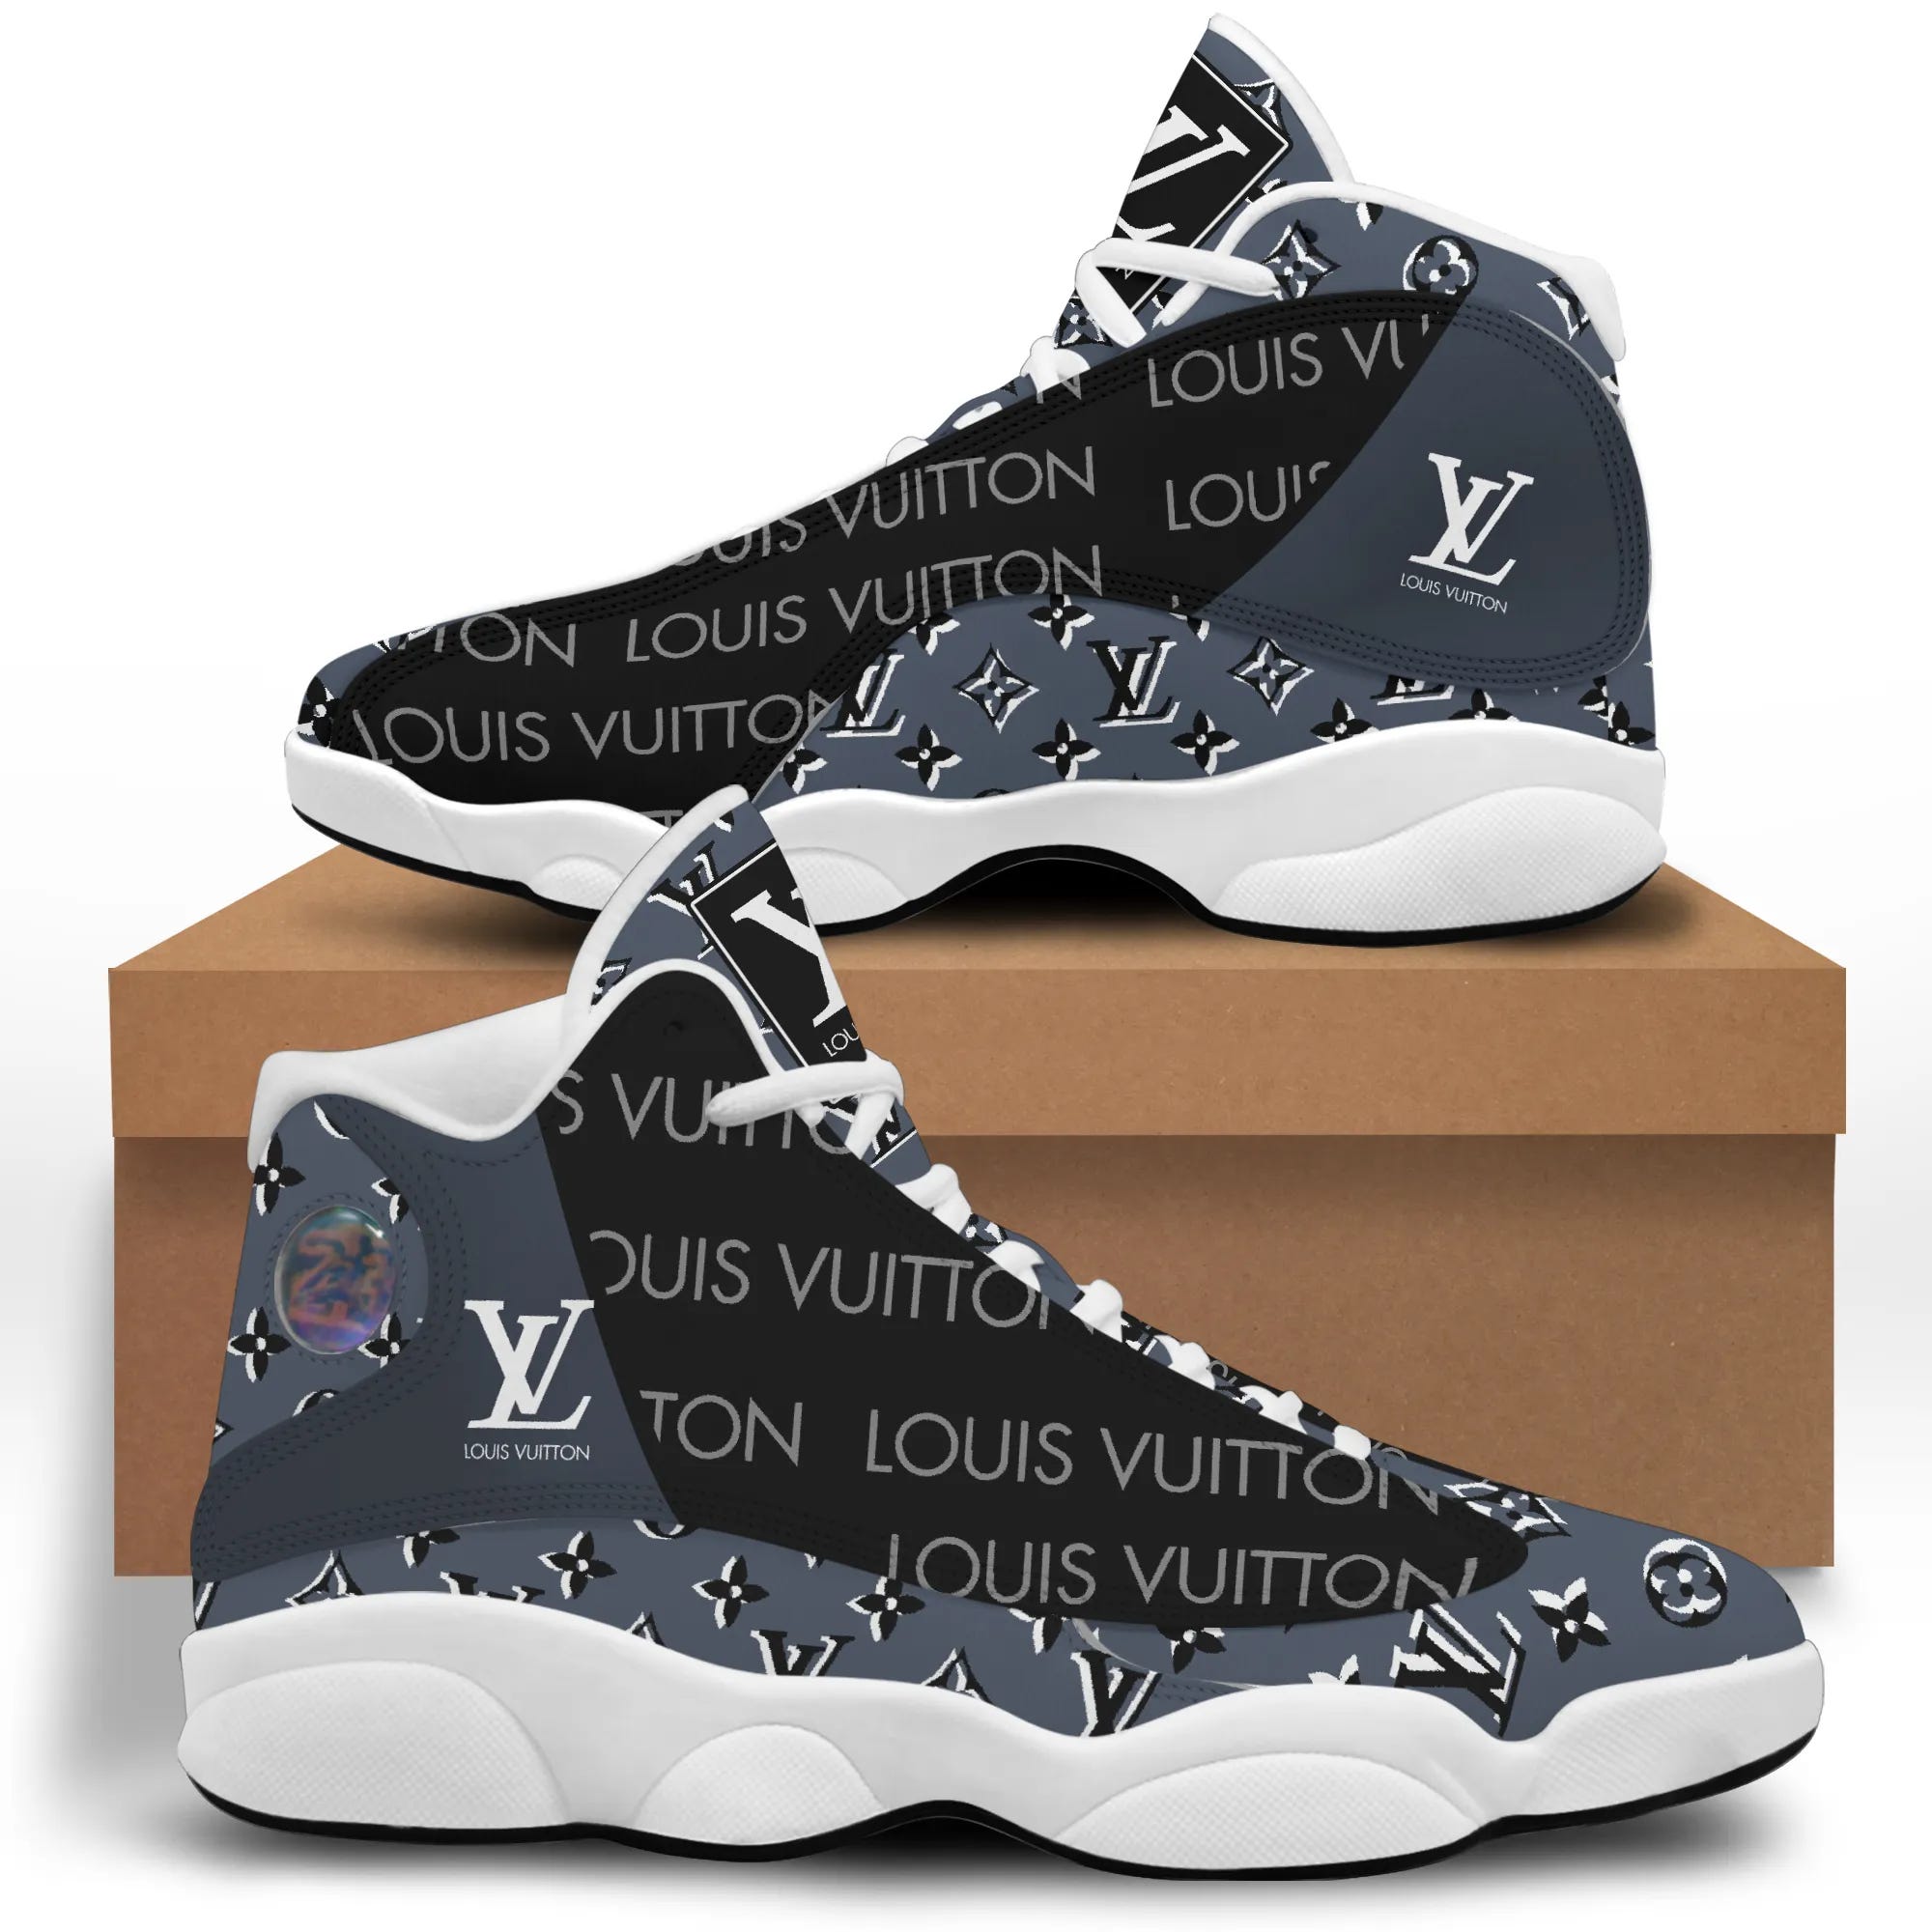 Louis Vuitton Air Jordan 13 Sneakers Gifts For Men Women